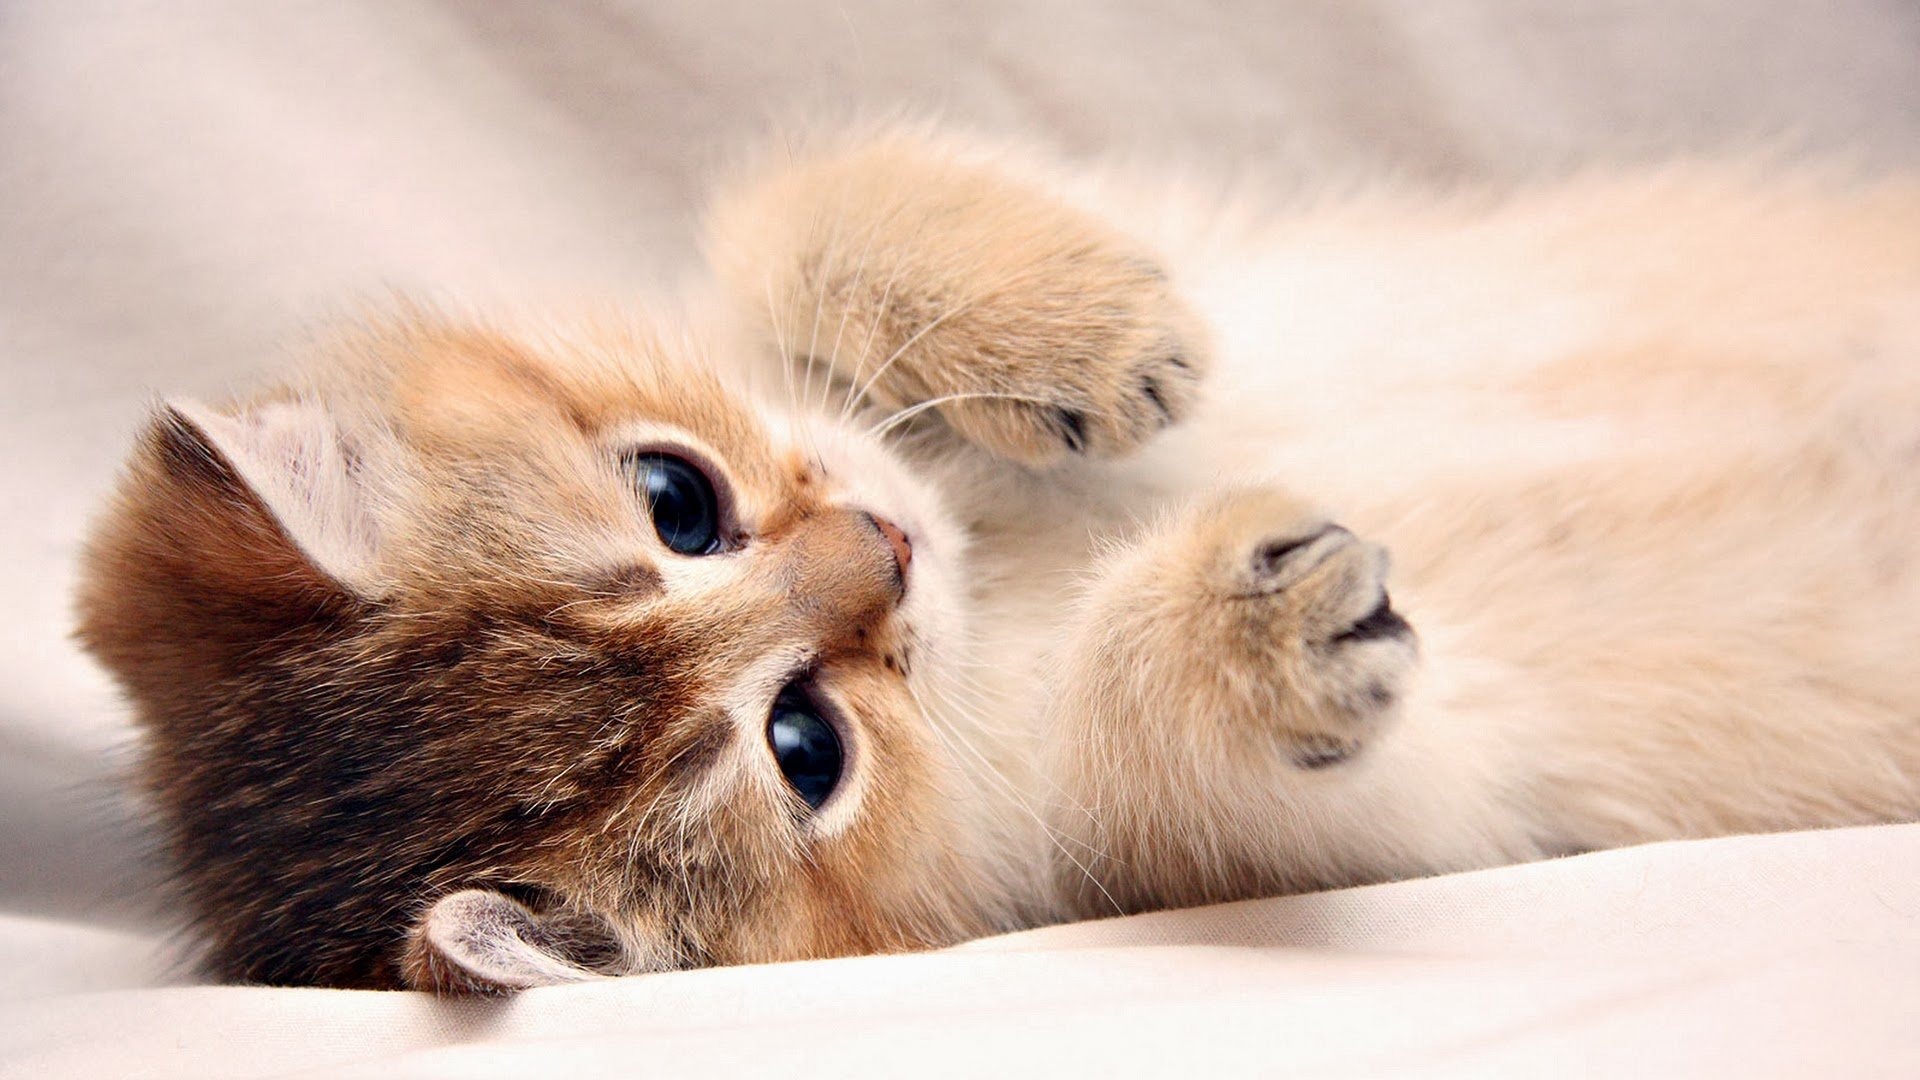 cute kitten cat animals hd wallpaper image photo picture